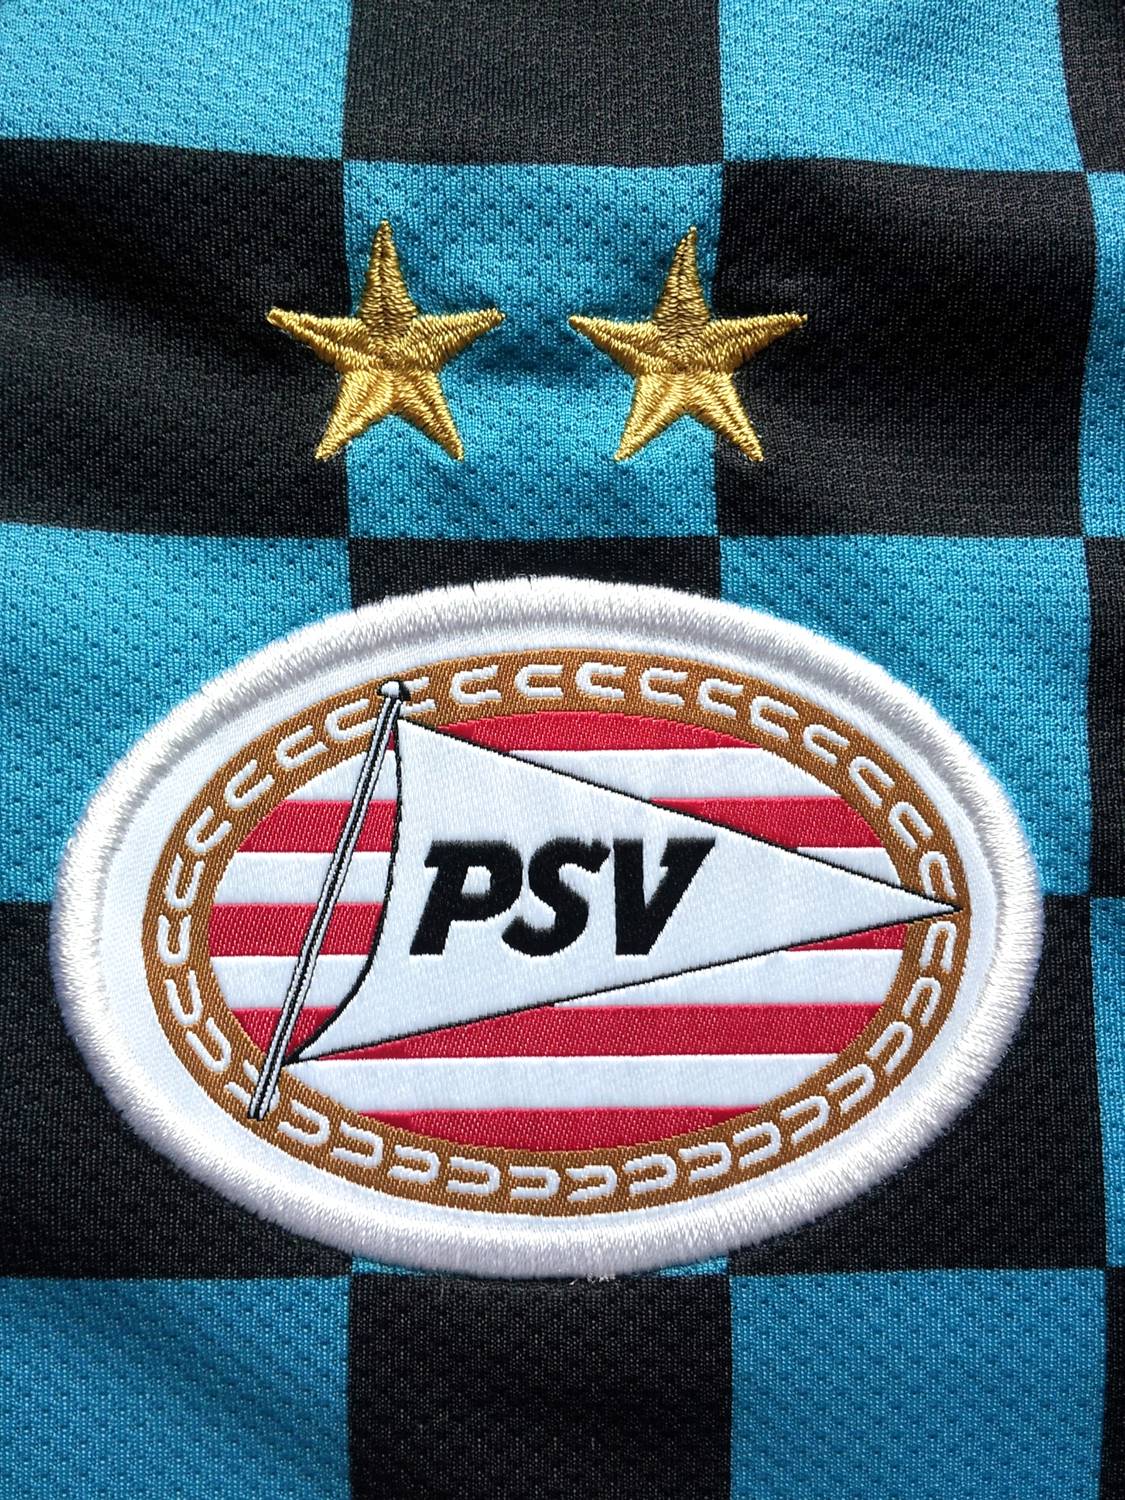 PSV Eindhoven Away voetbalshirt 2011 - 2012.
